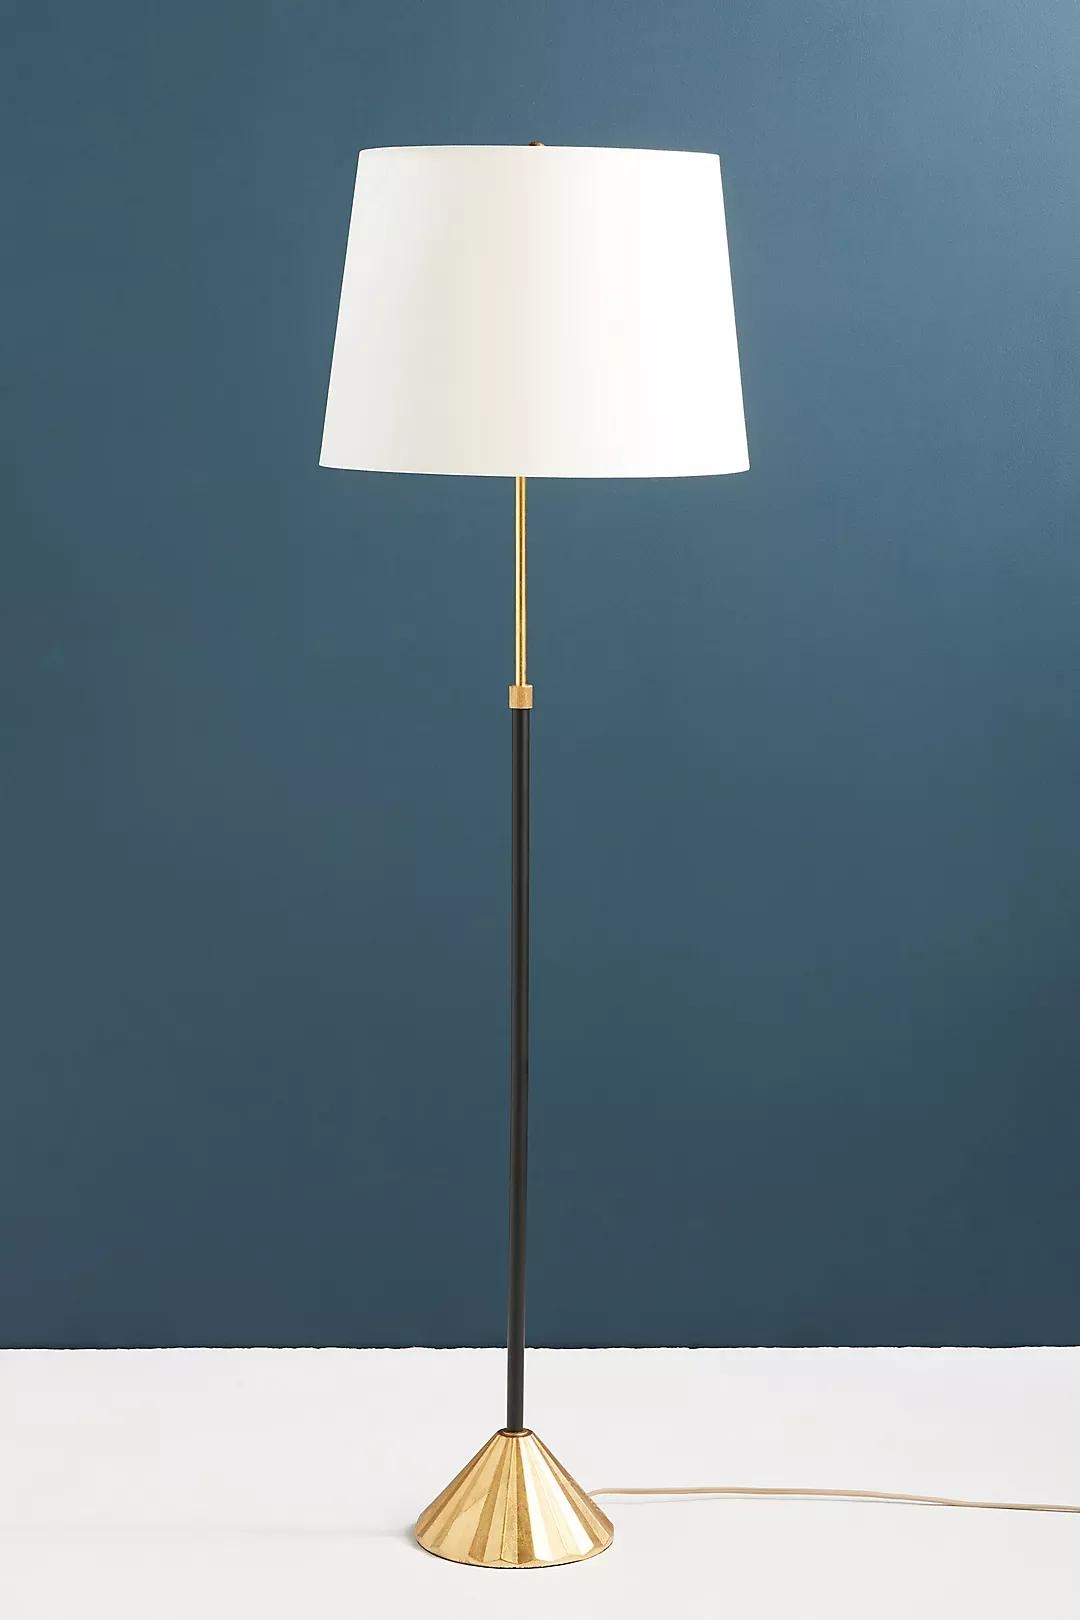 Coastal Living Parasol Floor Lamp - Image 0